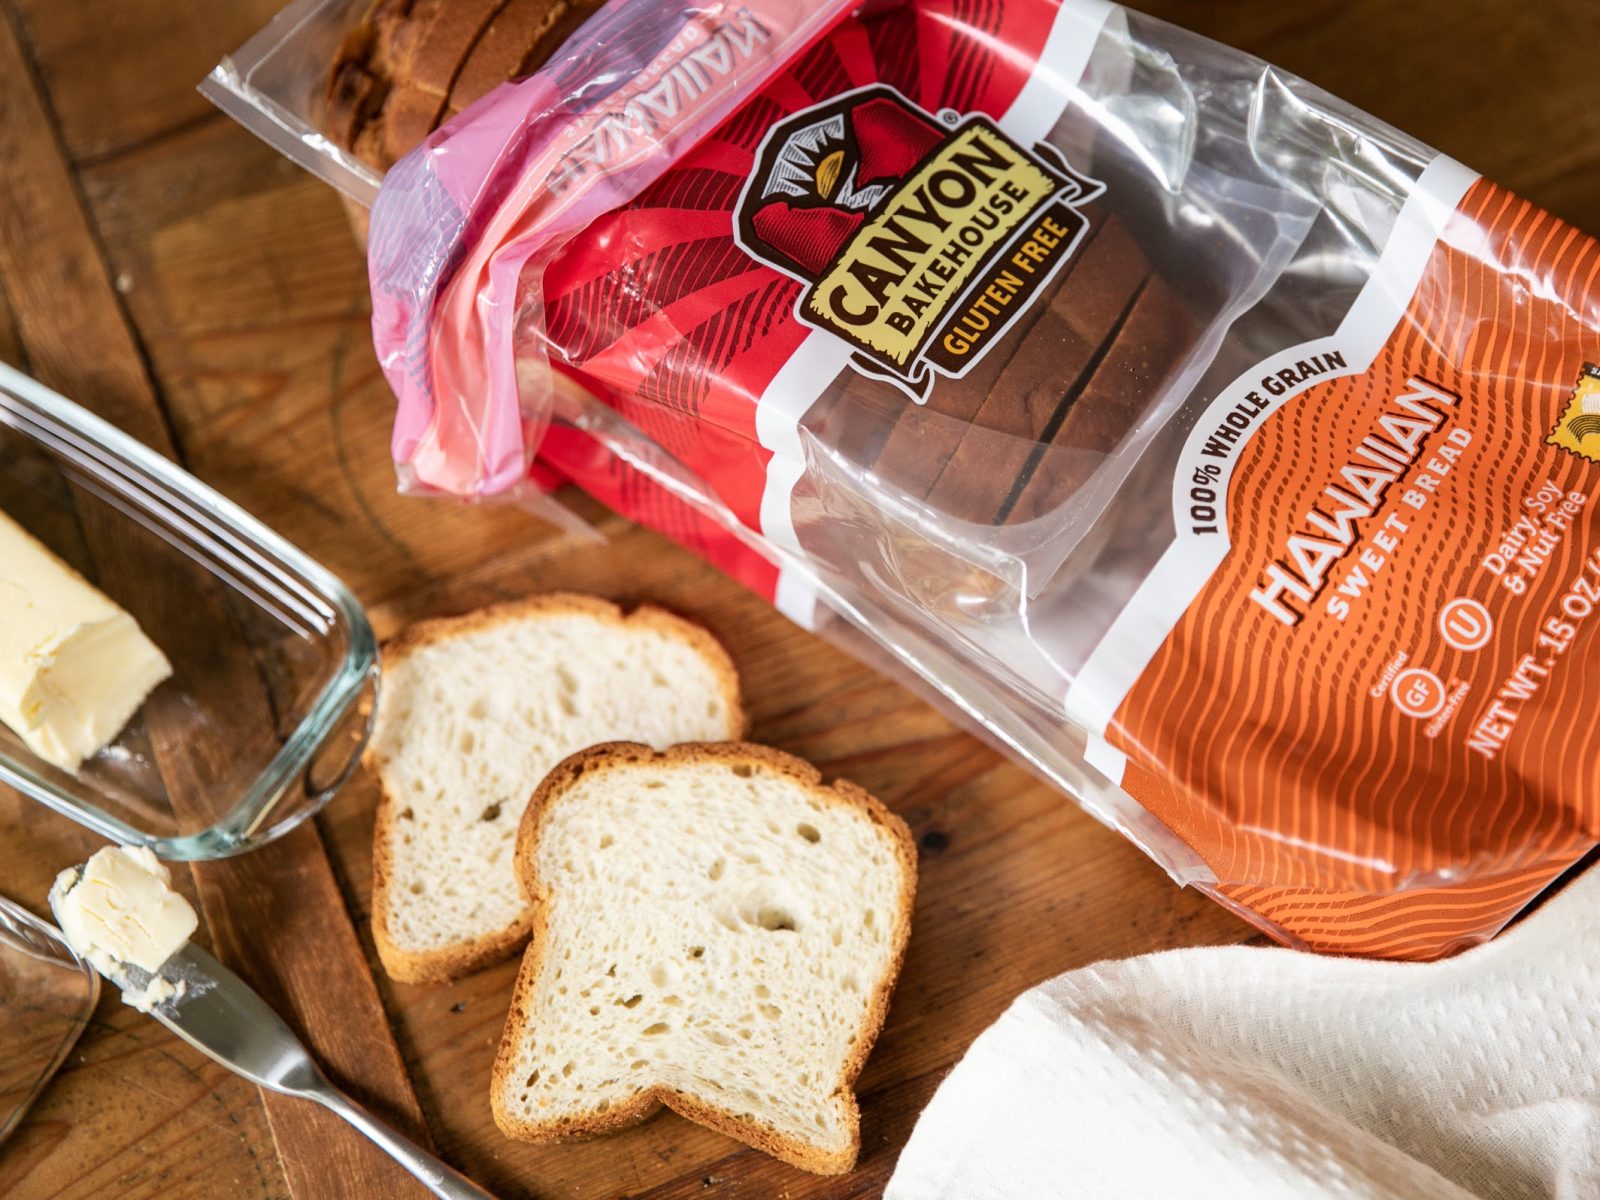 Canyon Bakehouse Bread Just $4.49 At Kroger (Regular Price $7.49)